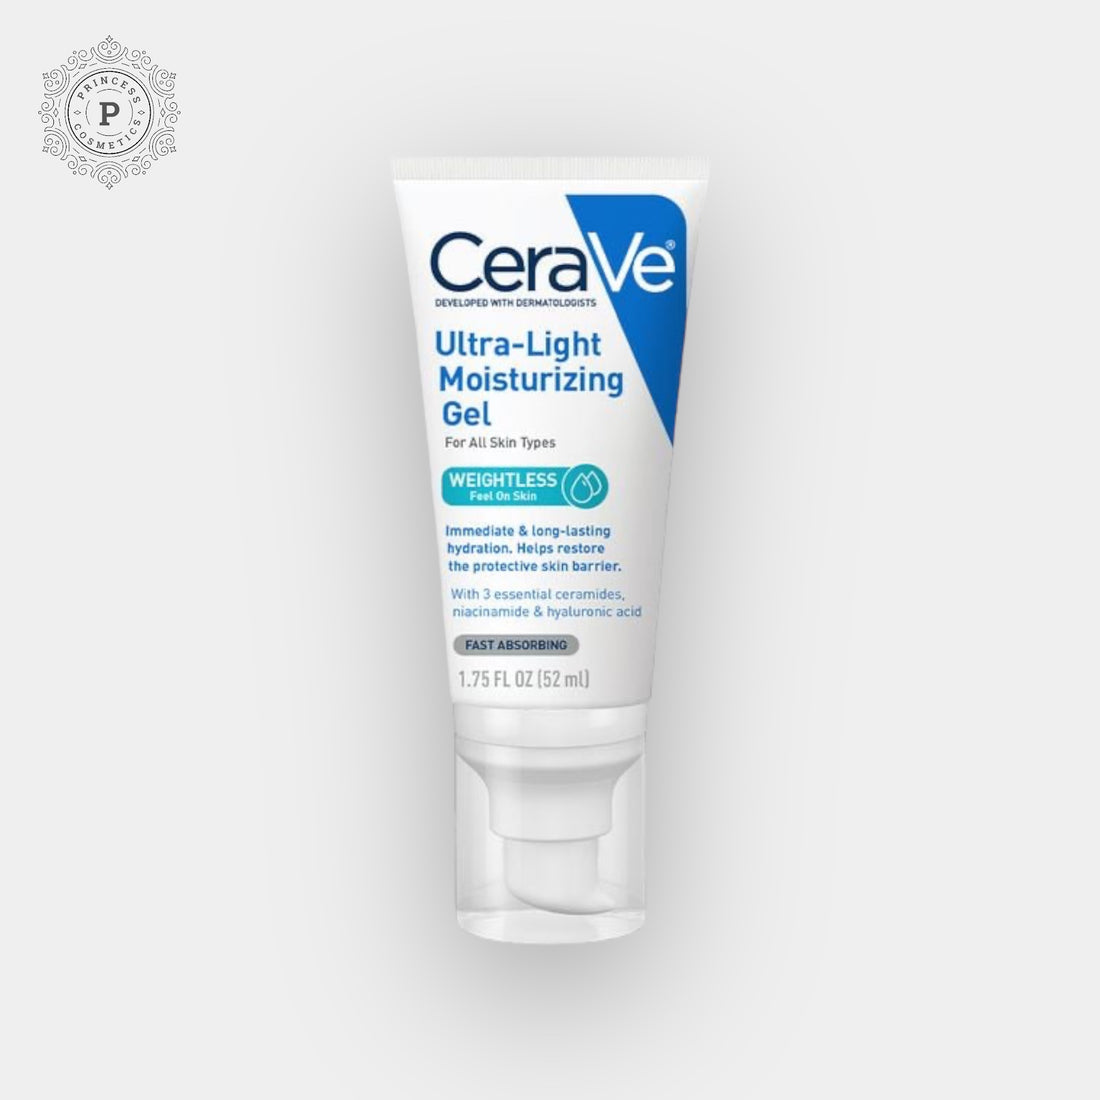 Cerave Ultra-Light Moisturizing Gel 52ml